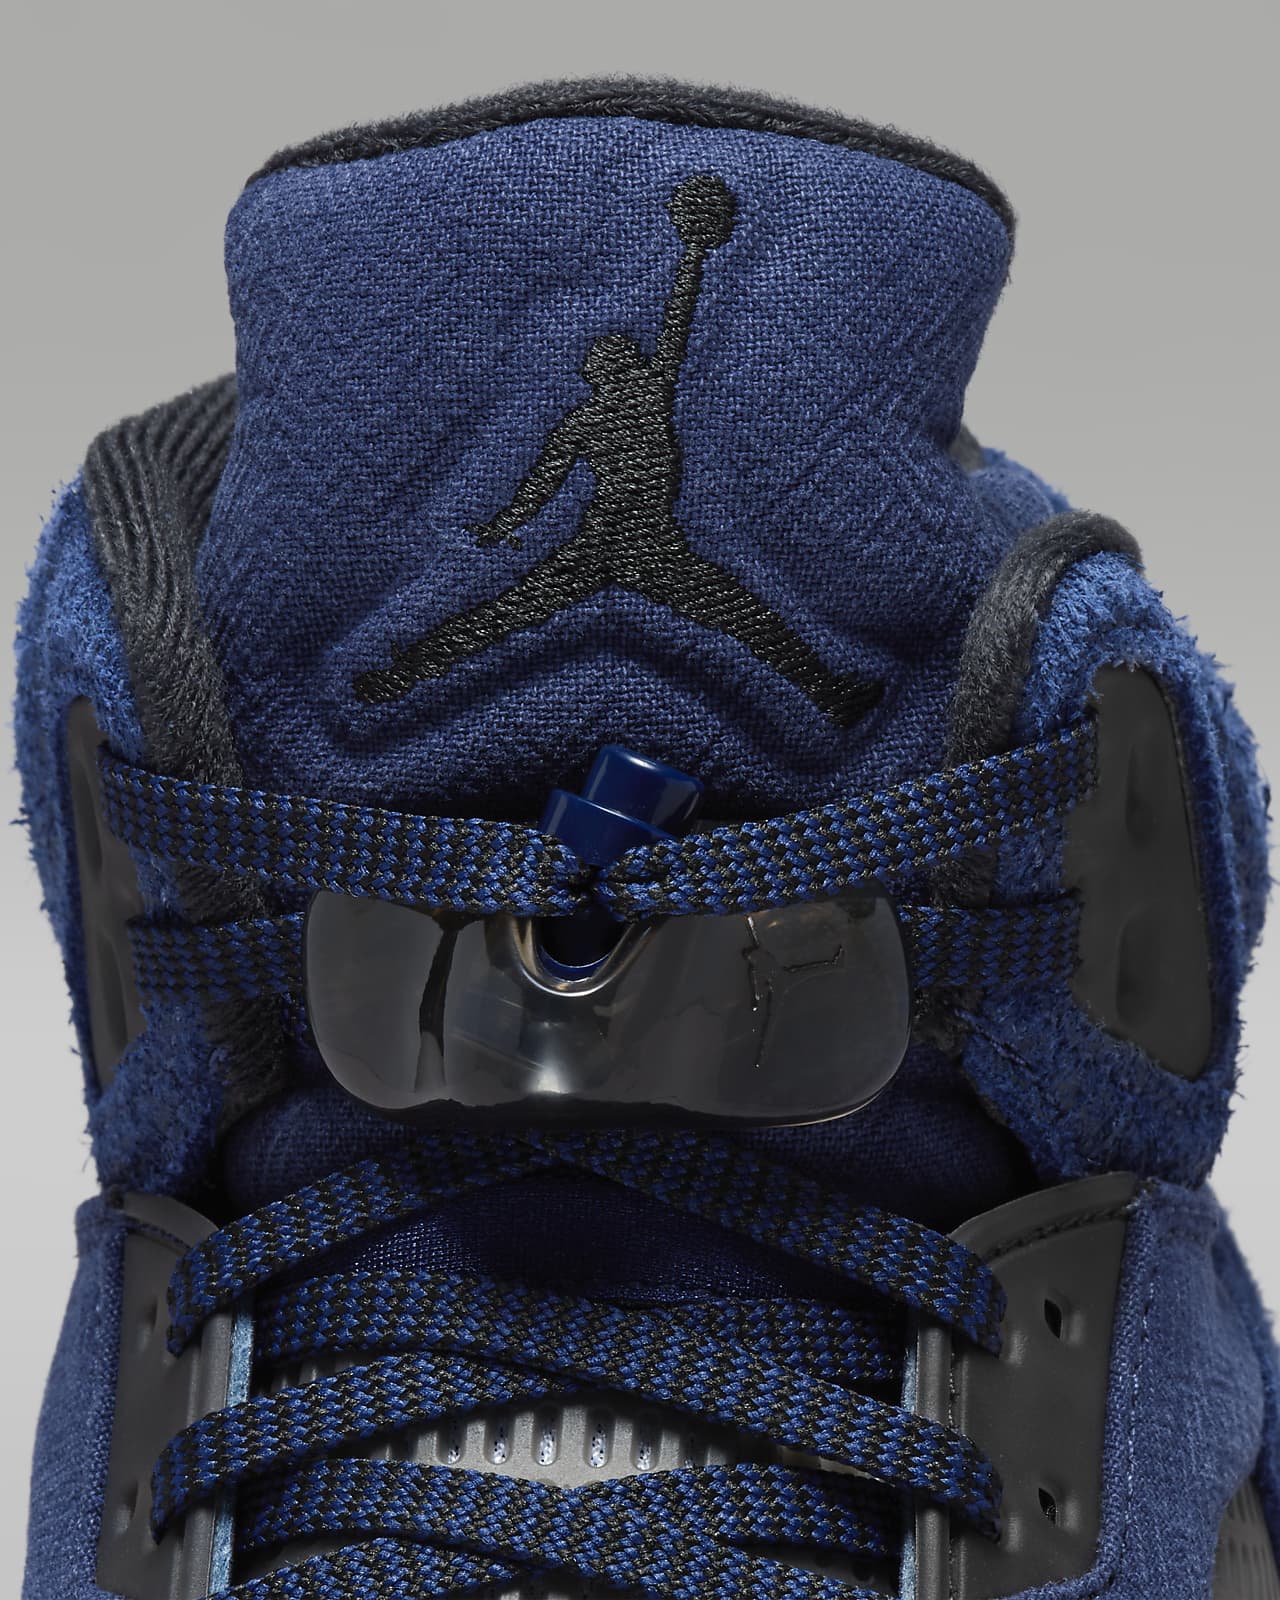 Shirt to Match Air Jordan Retro 5 Blue Suede Sneakers.trust 